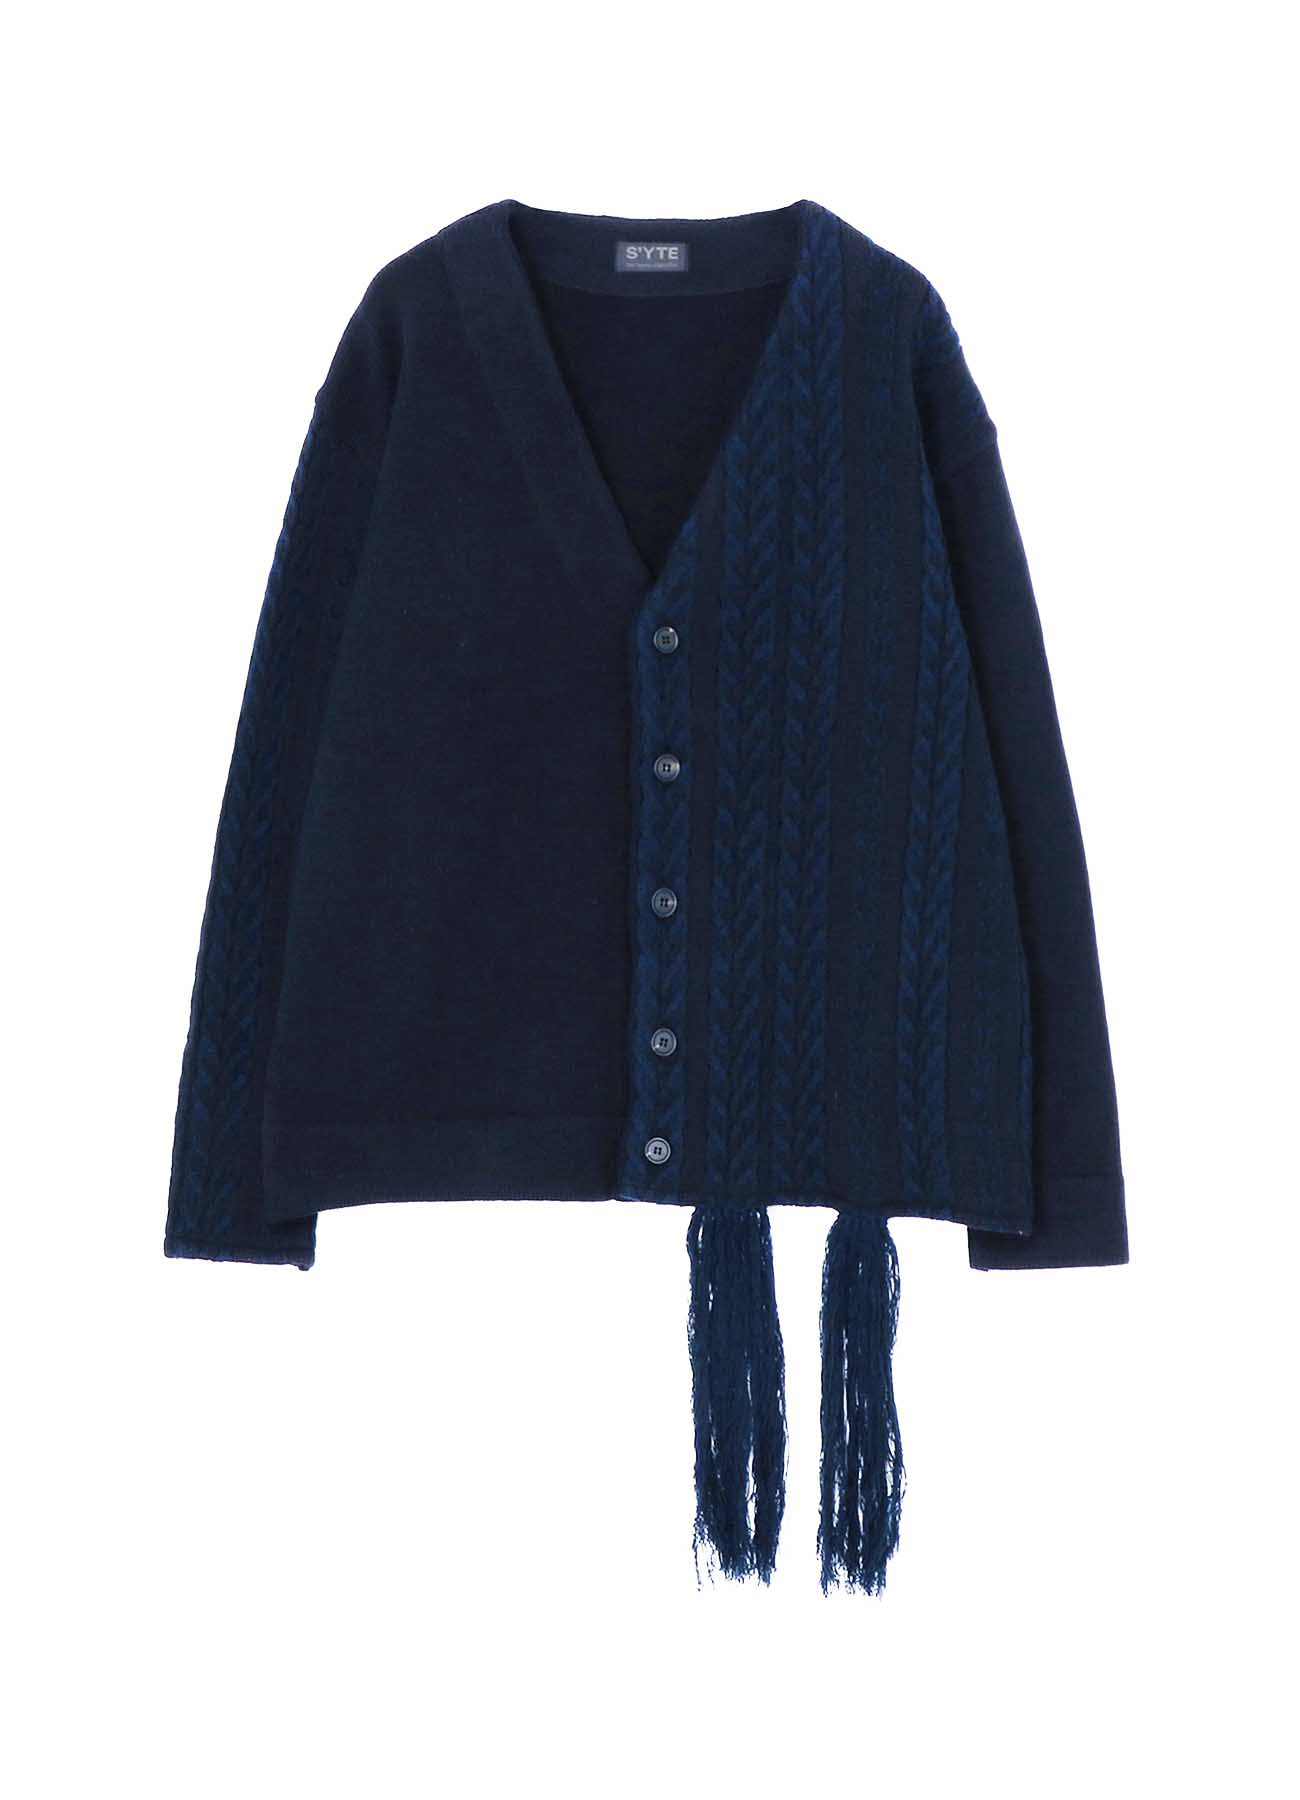 Jacquard knit Cardigan with Tasseled Hem and Color Scheme Design